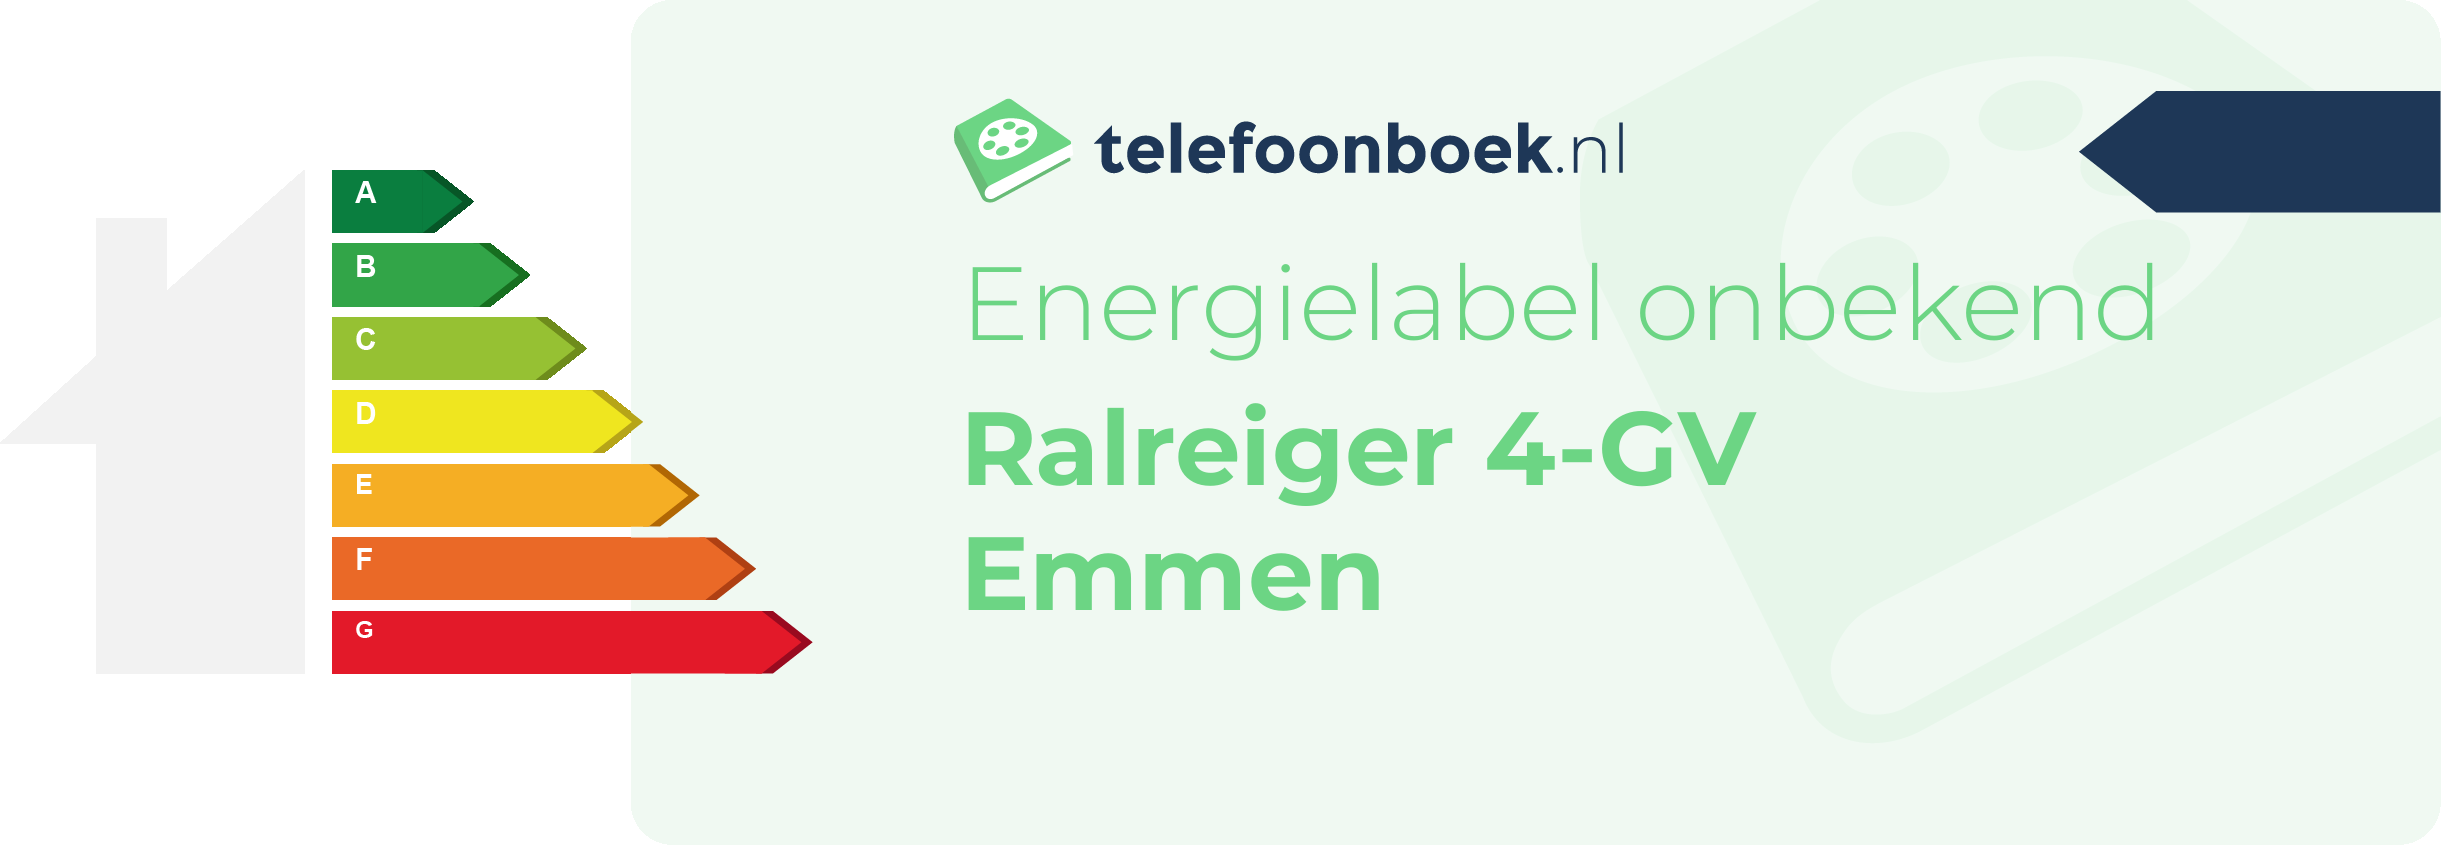 Energielabel Ralreiger 4-GV Emmen